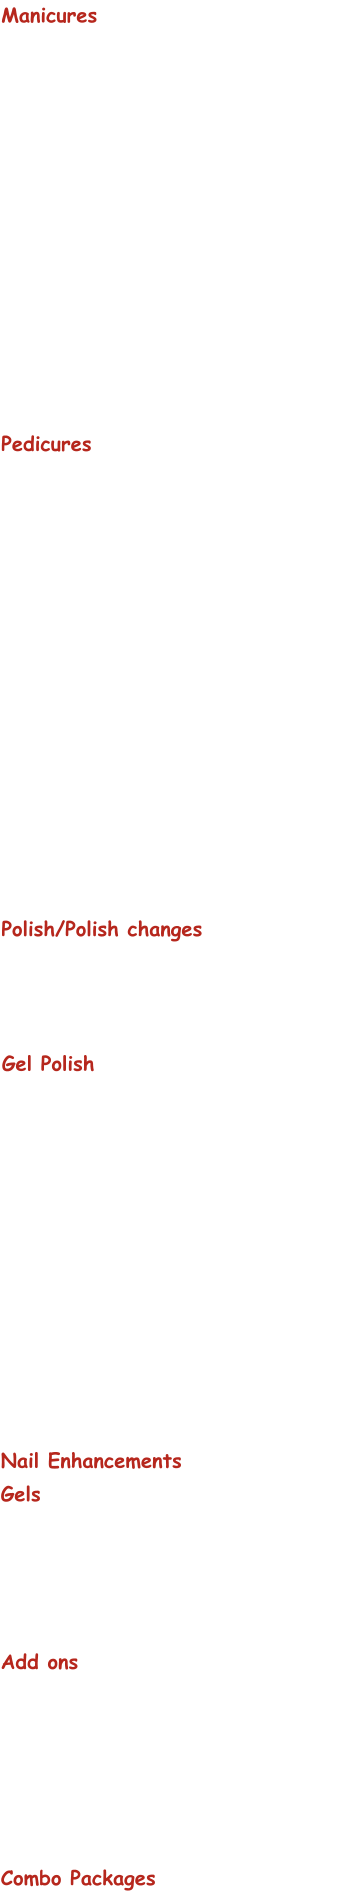 Nail EnhancementsGels Add ons Manicures Pedicures Polish/Polish changes Gel Polish Combo Packages